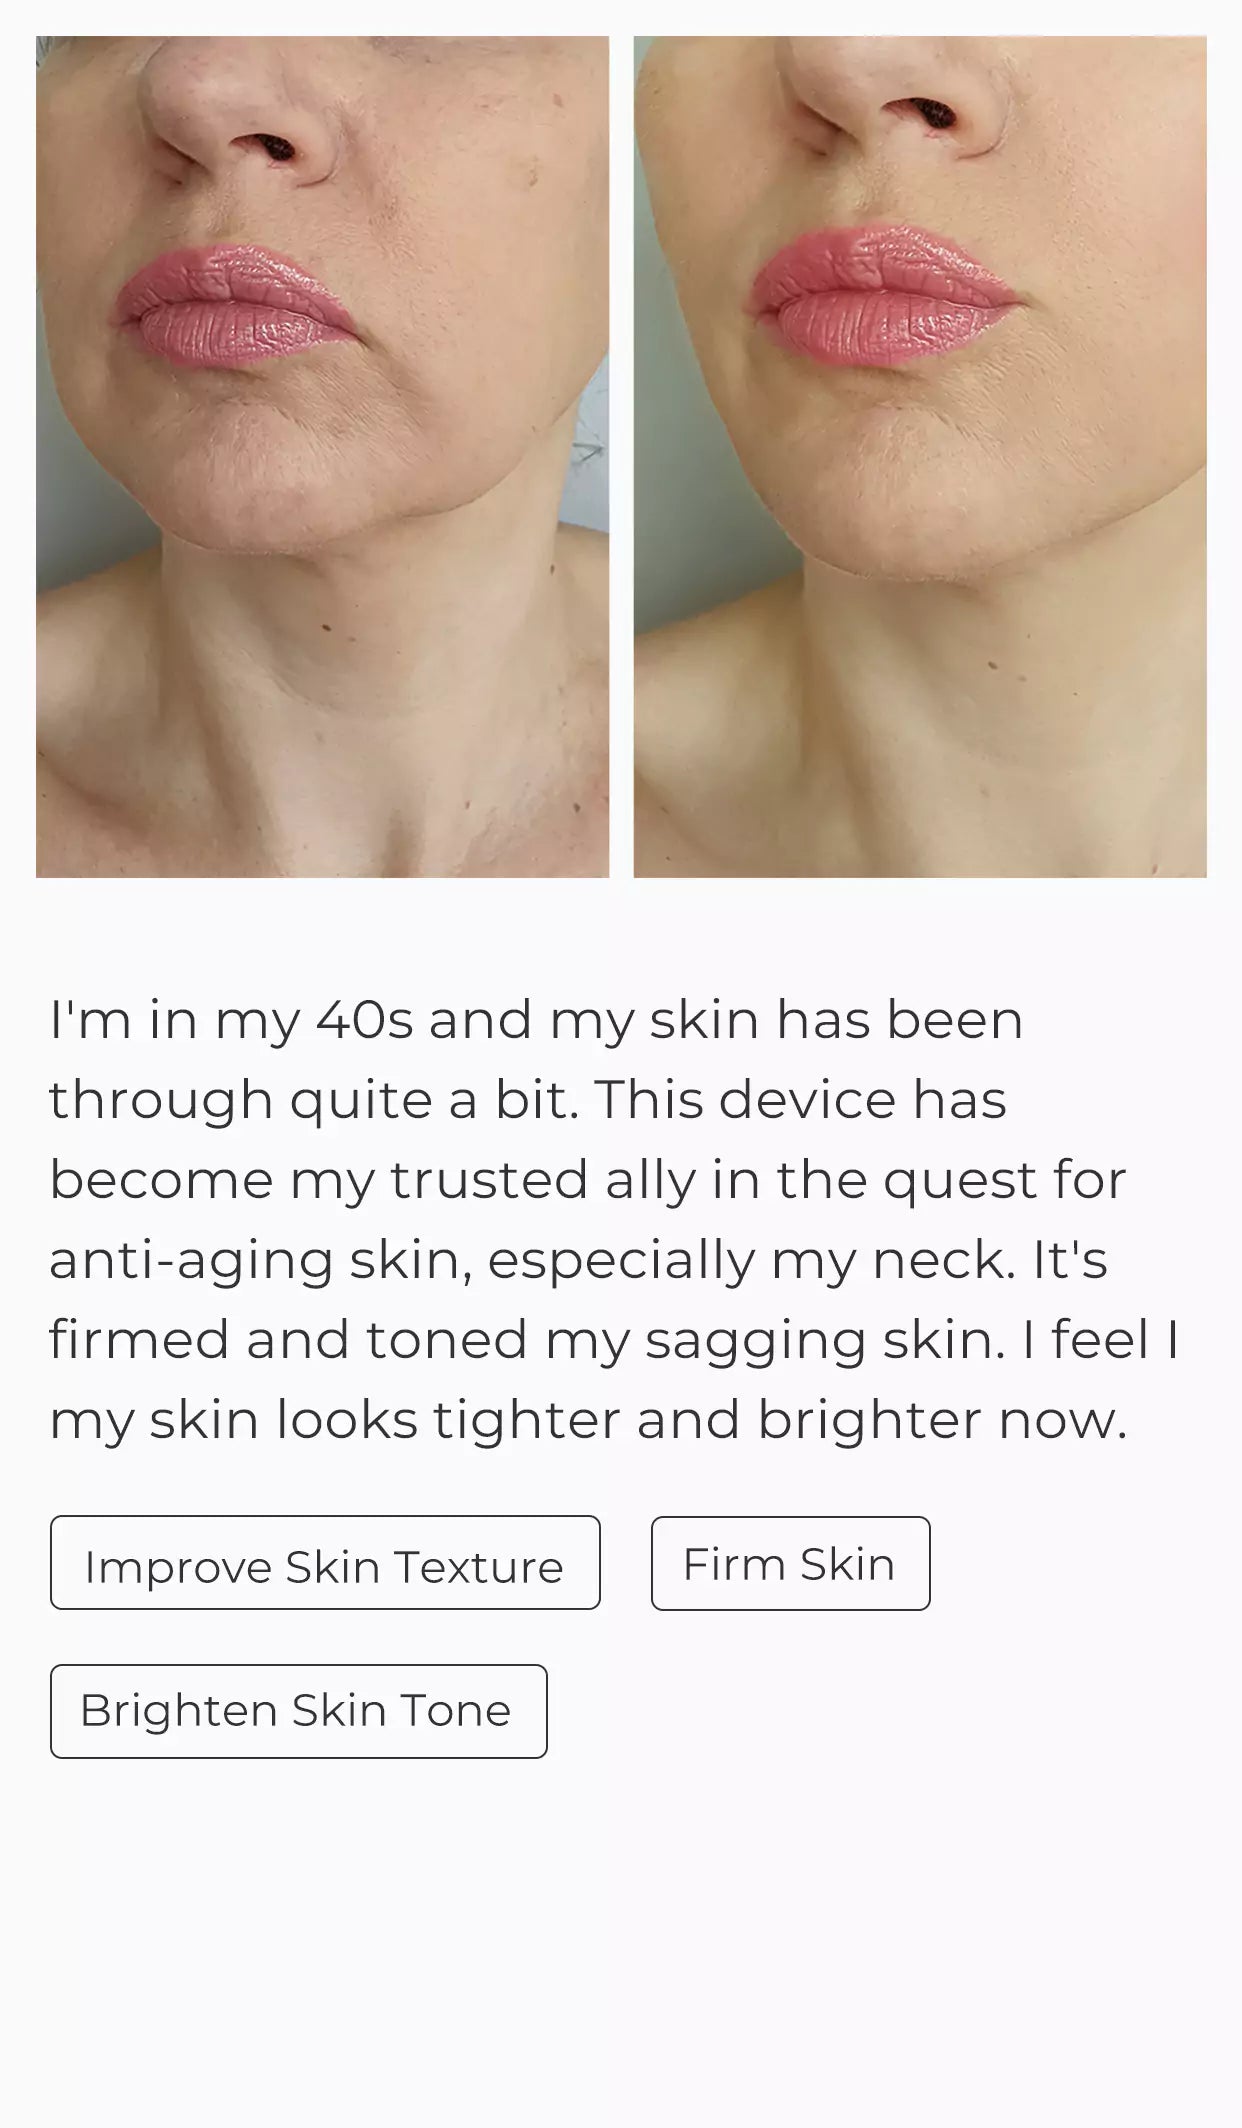 Good feedback from customer- Firm my skin